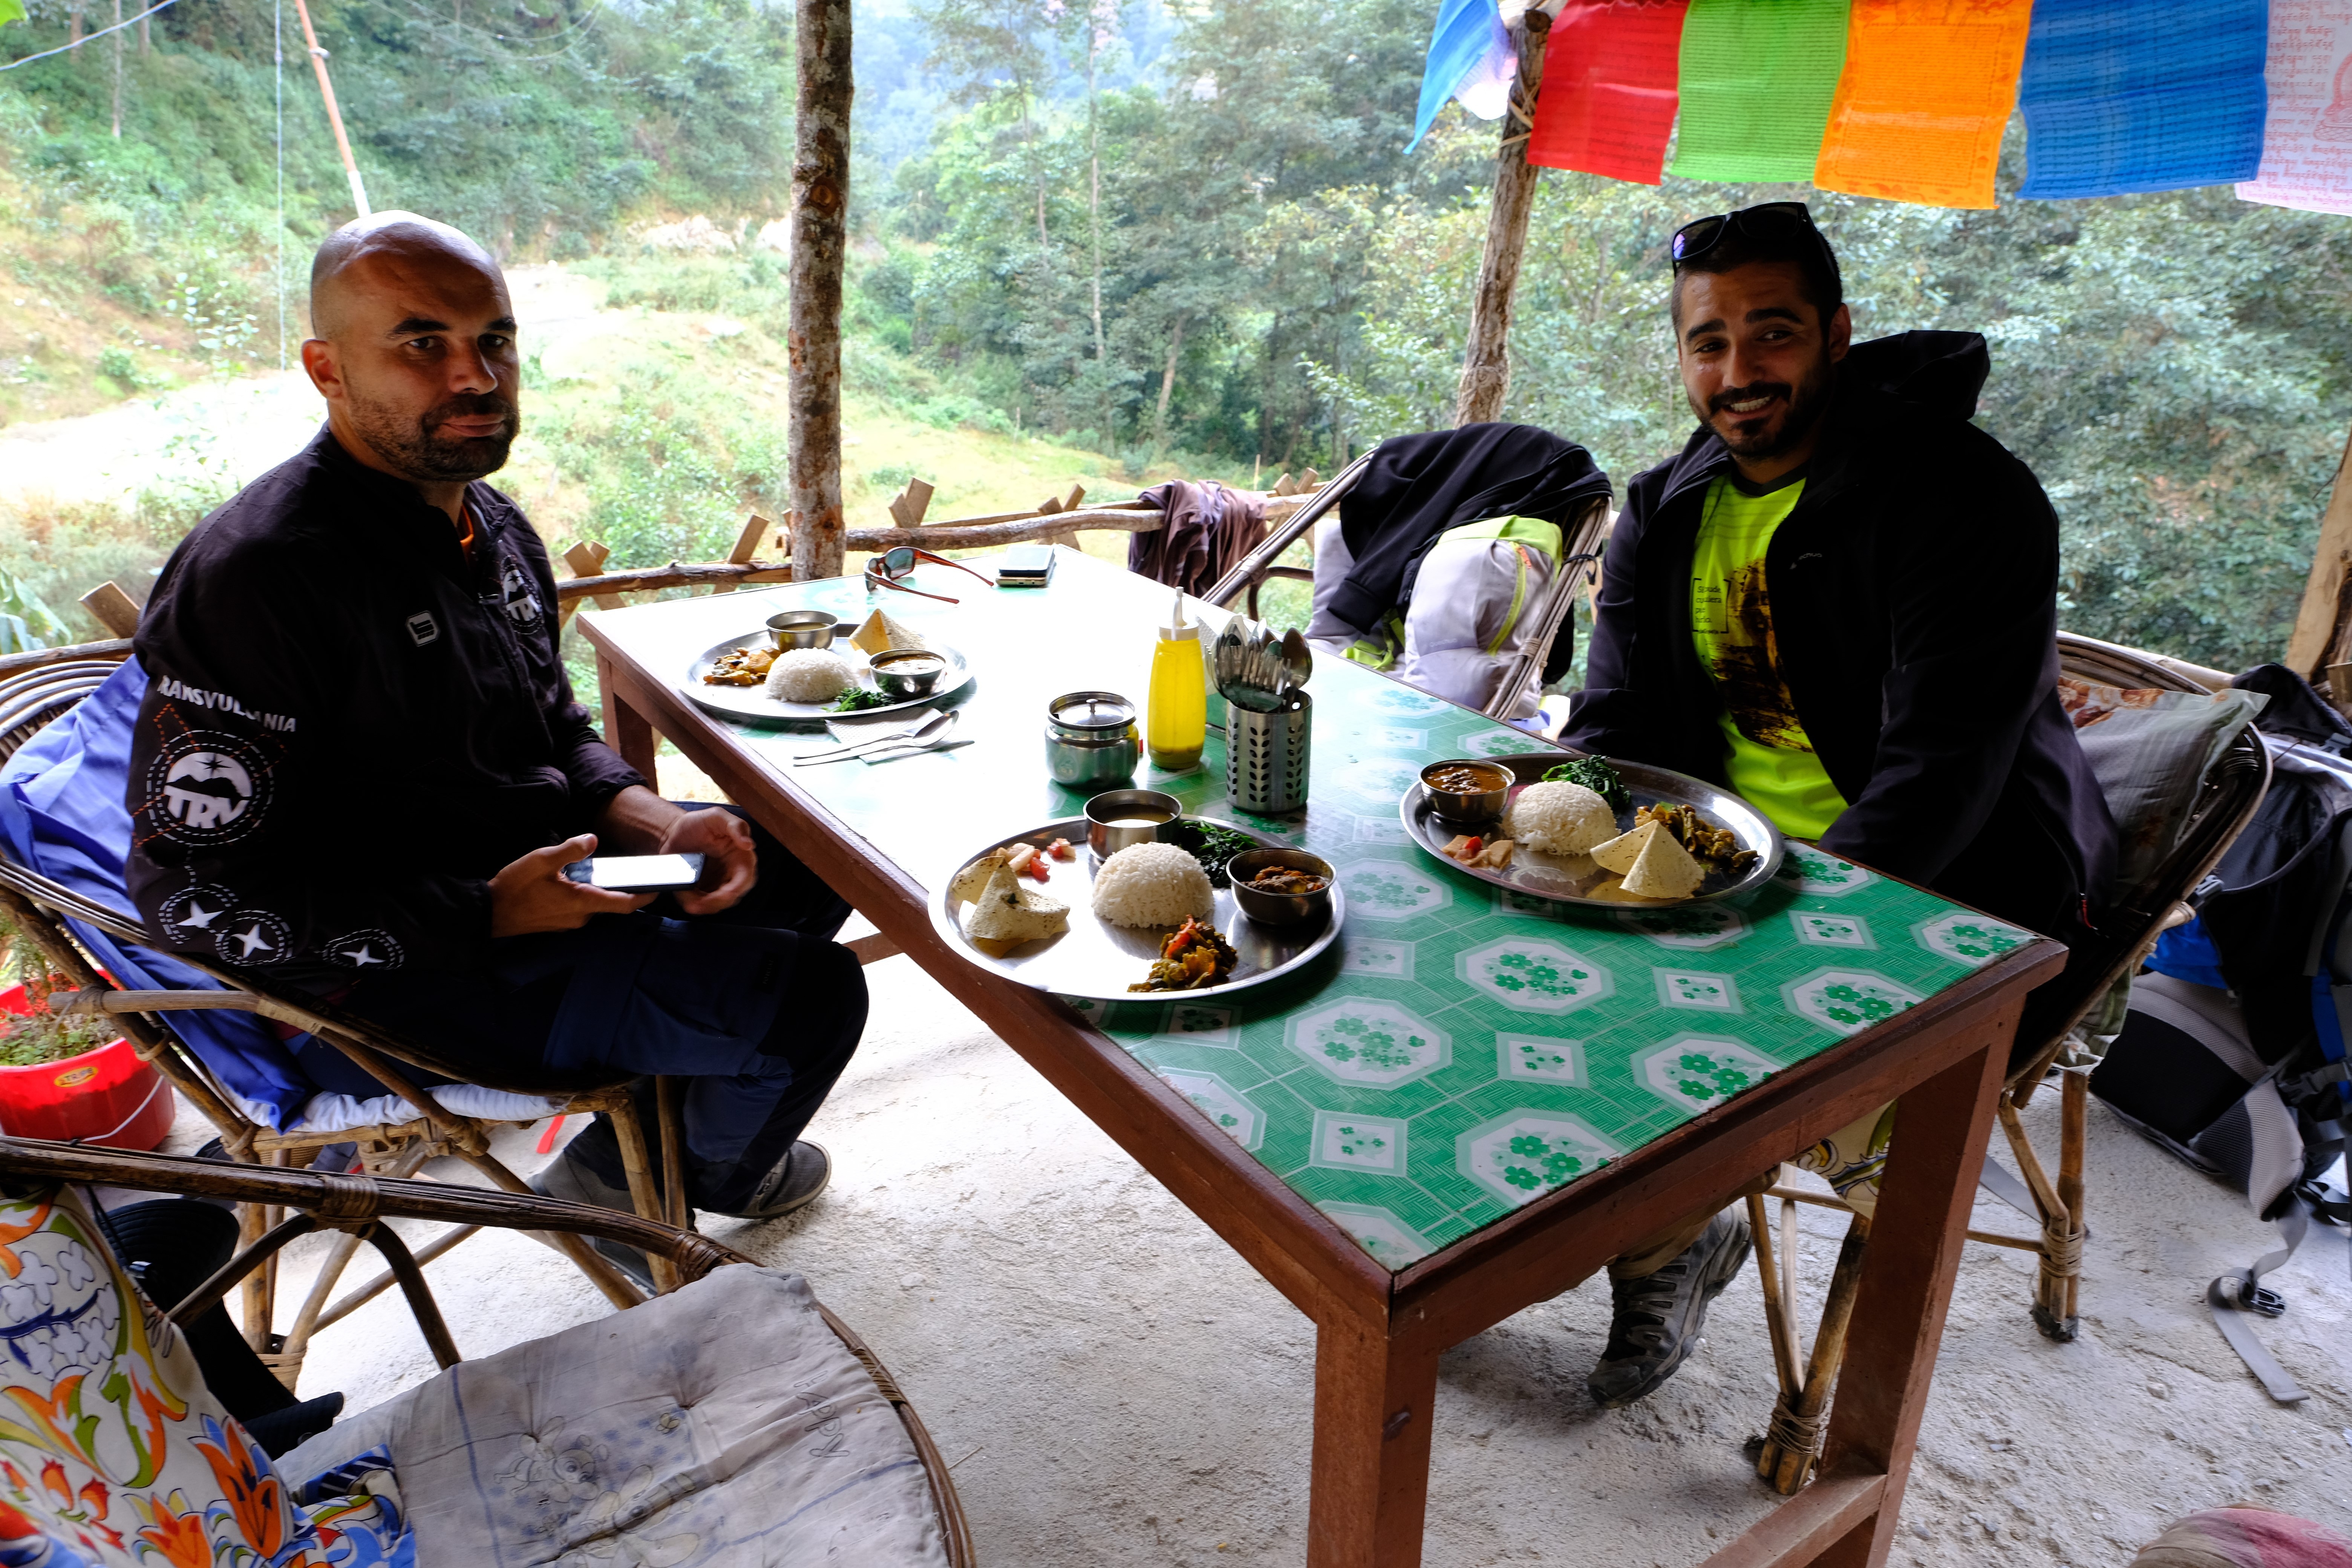 tourhub | Walk Mountain | Annapurna Base Camp Trek 15 days | ABCWalkMountain